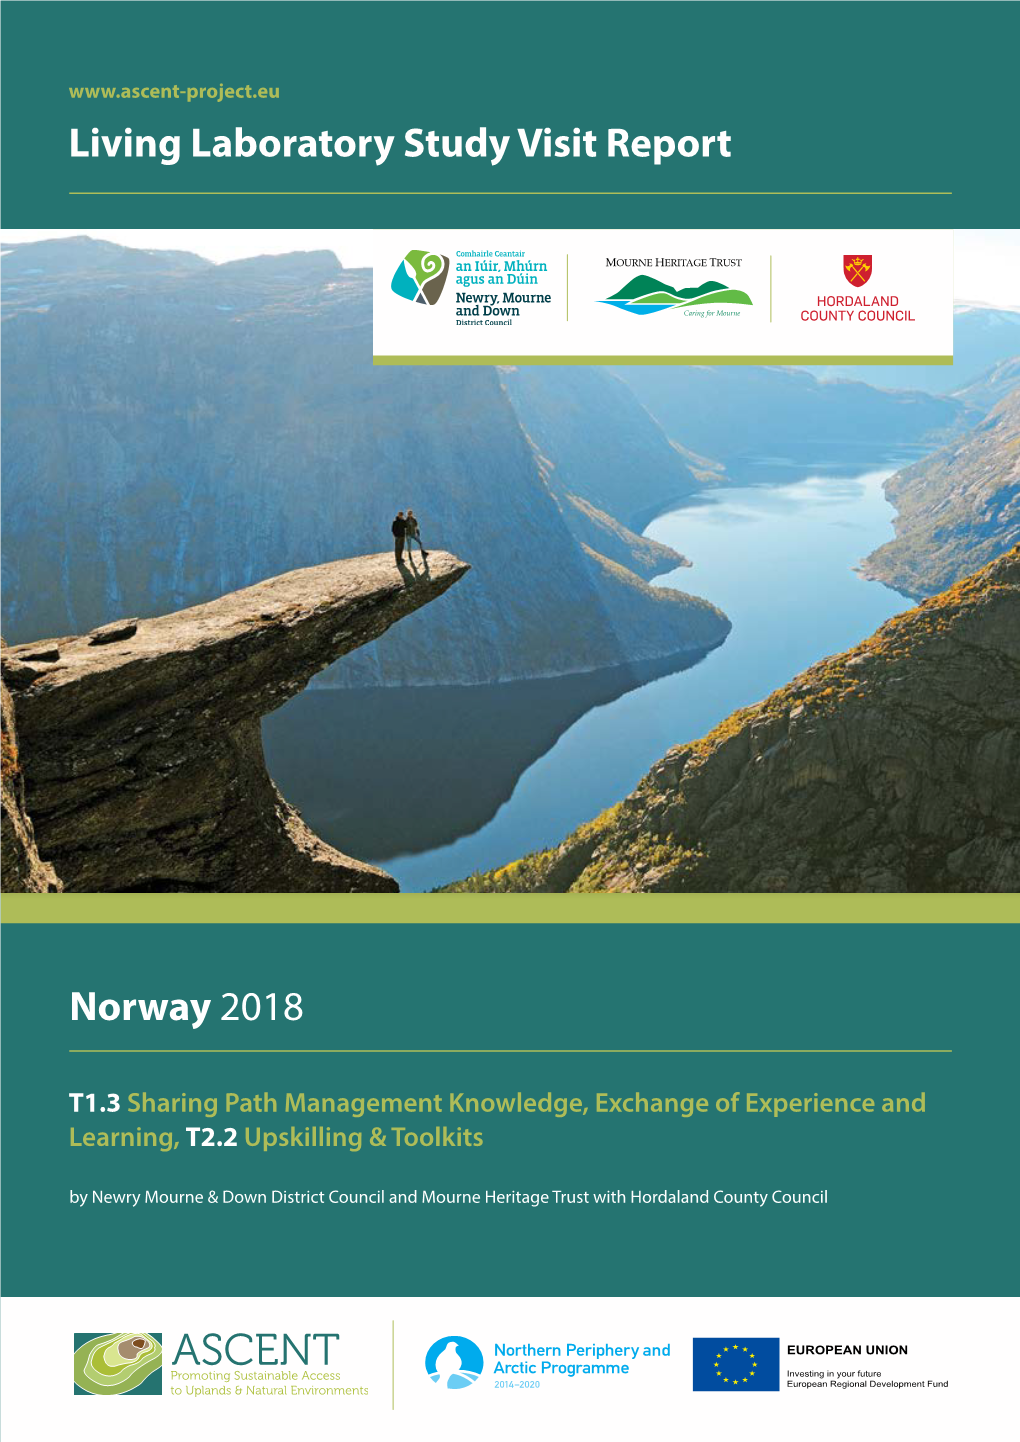 Norway 2018 Living Laboratory Study Visit Report